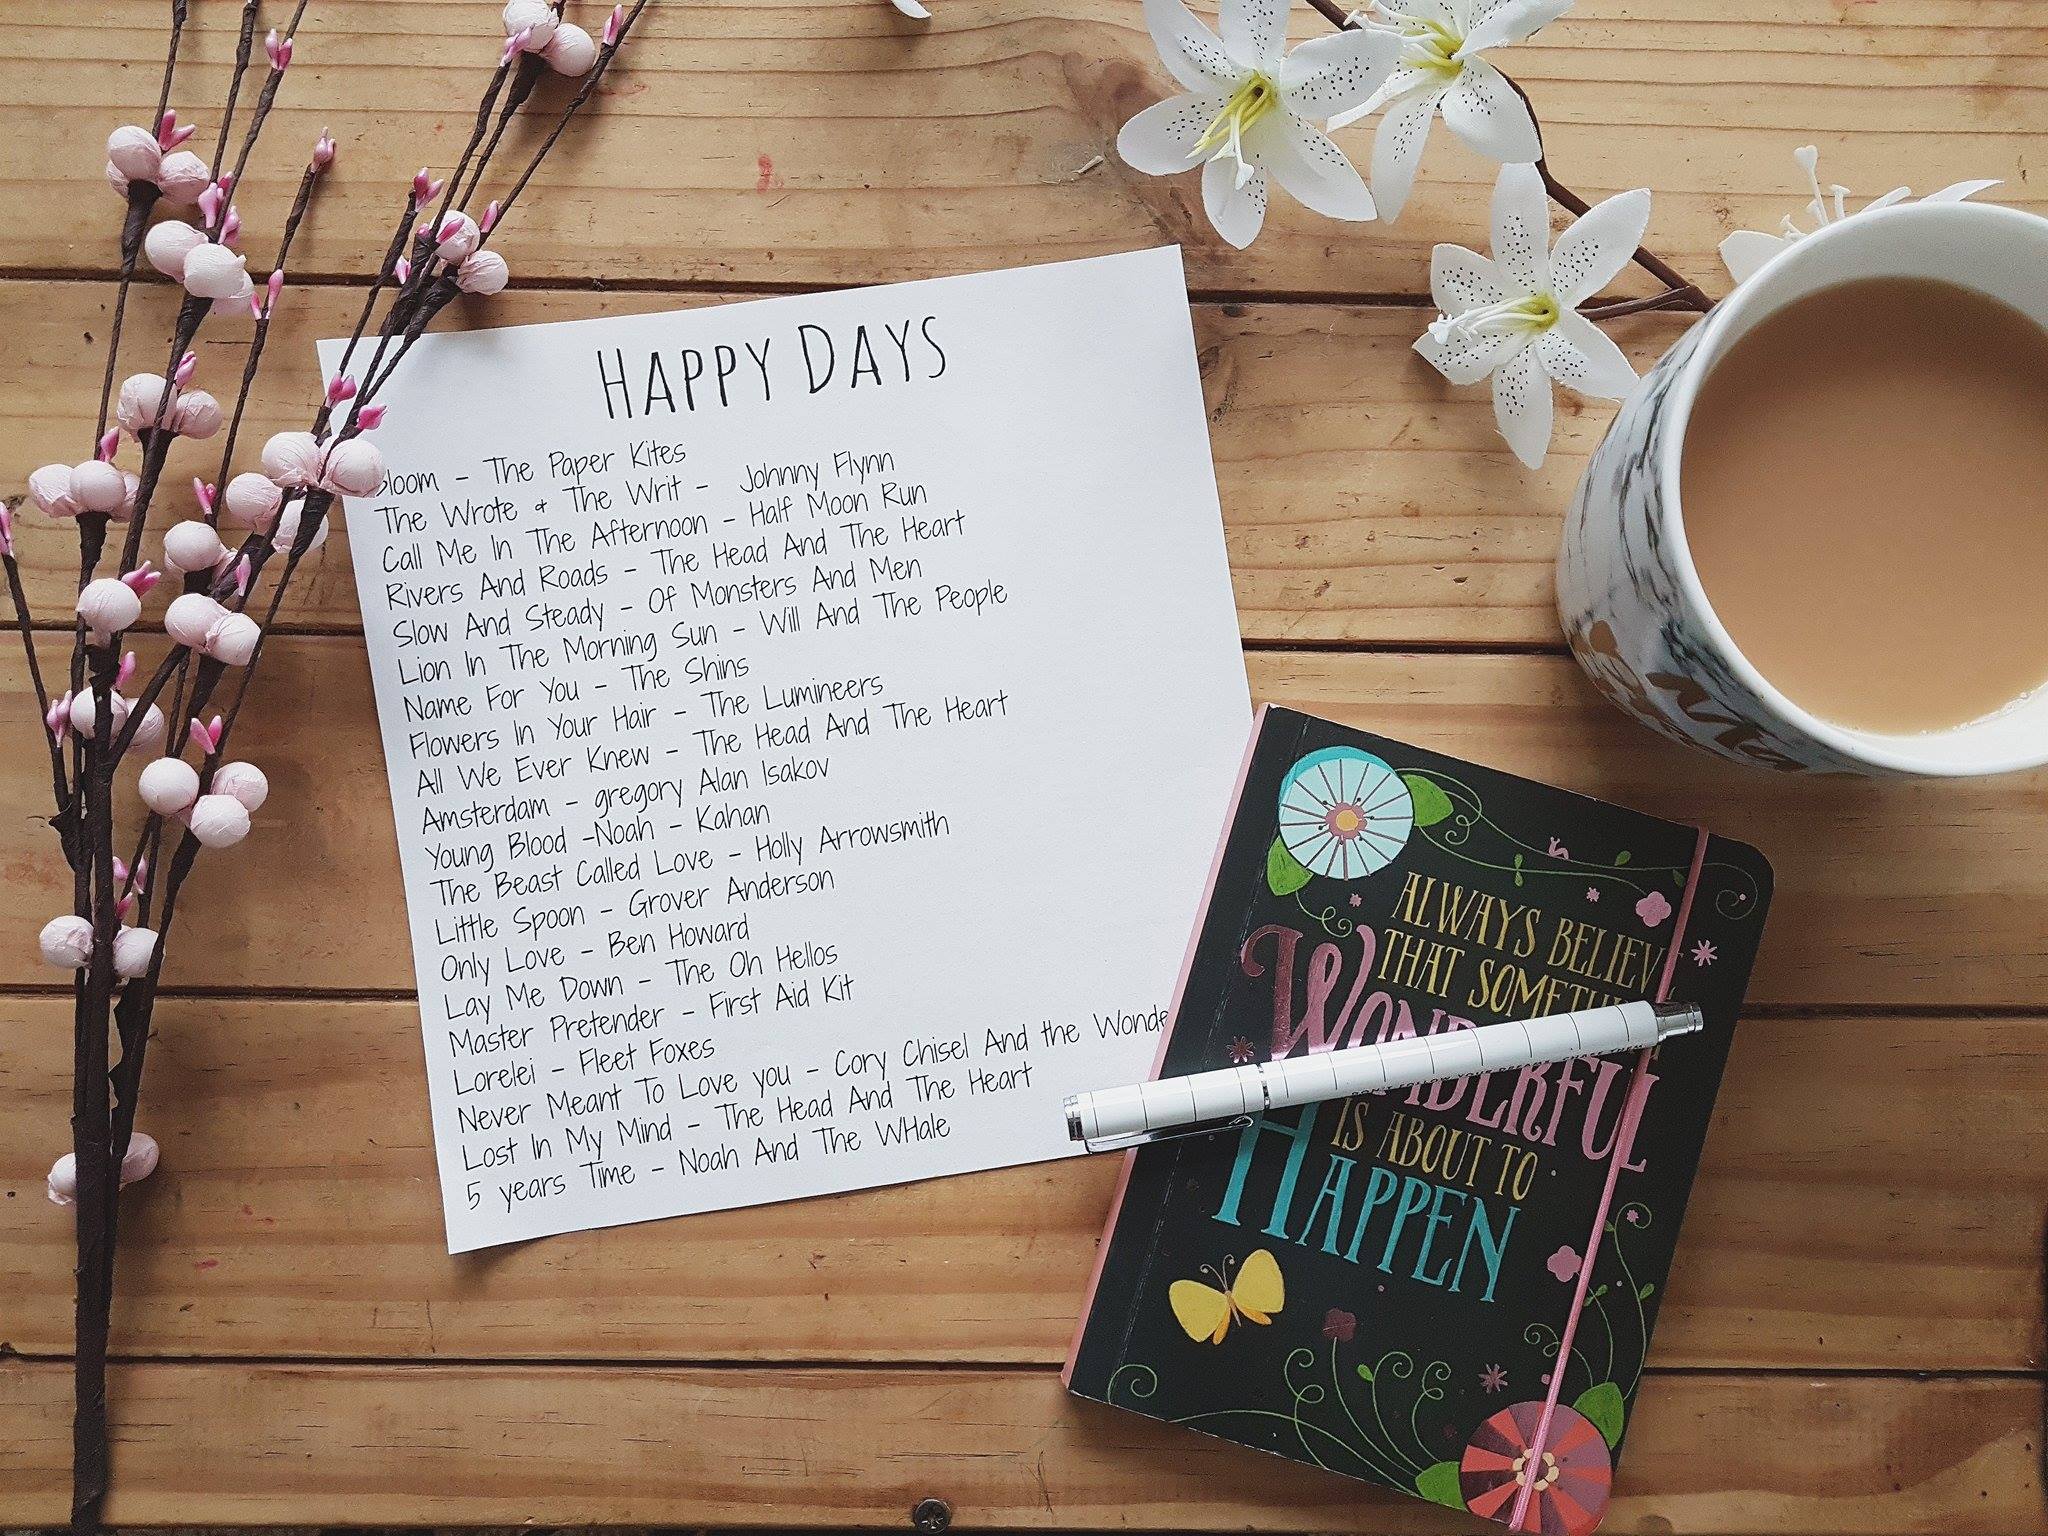 Happy Days – a spring playlist